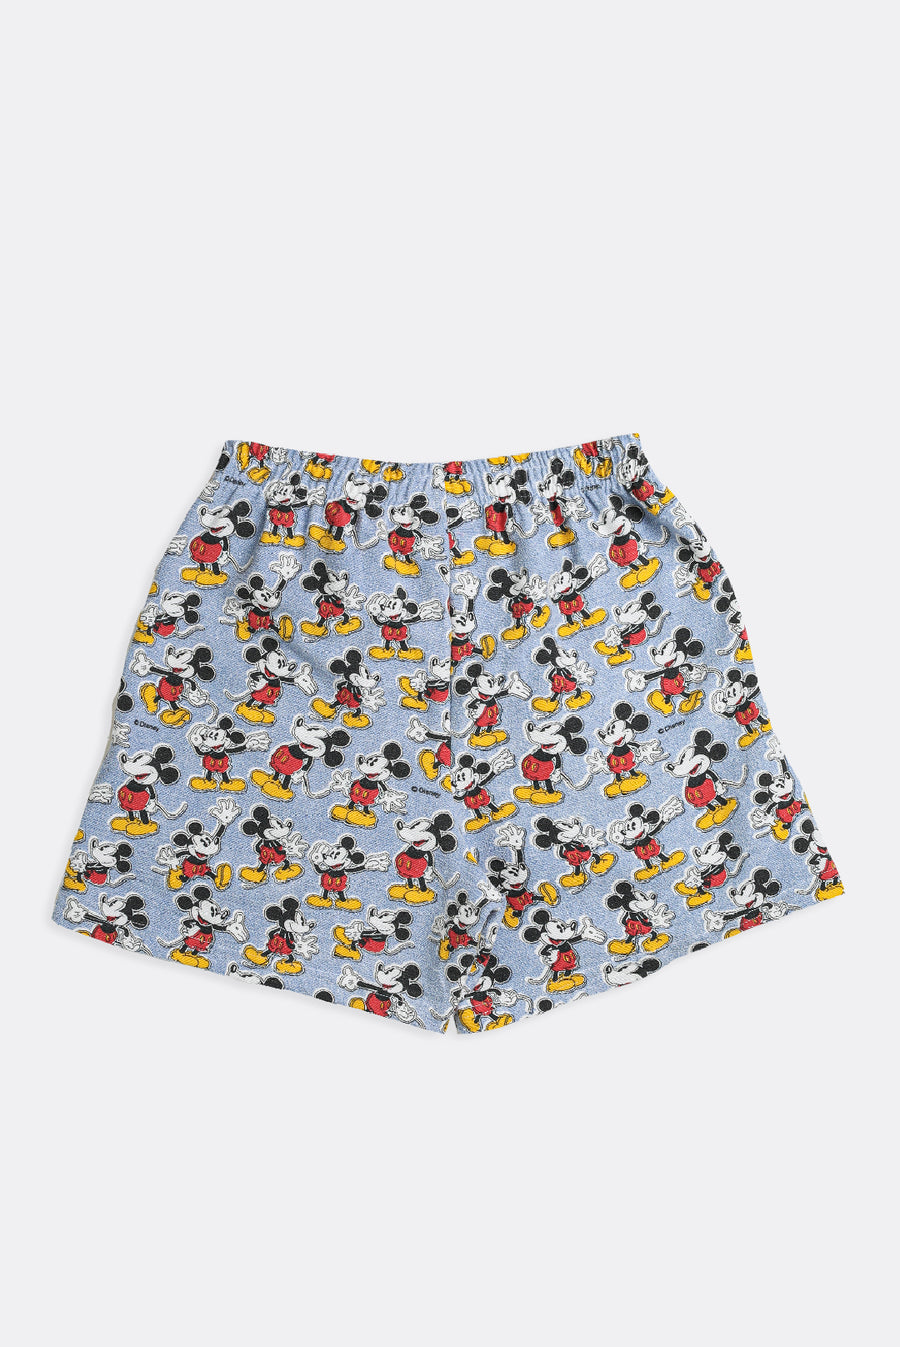 Unisex Rework Mickey Mouse Boxer Shorts - XS, S